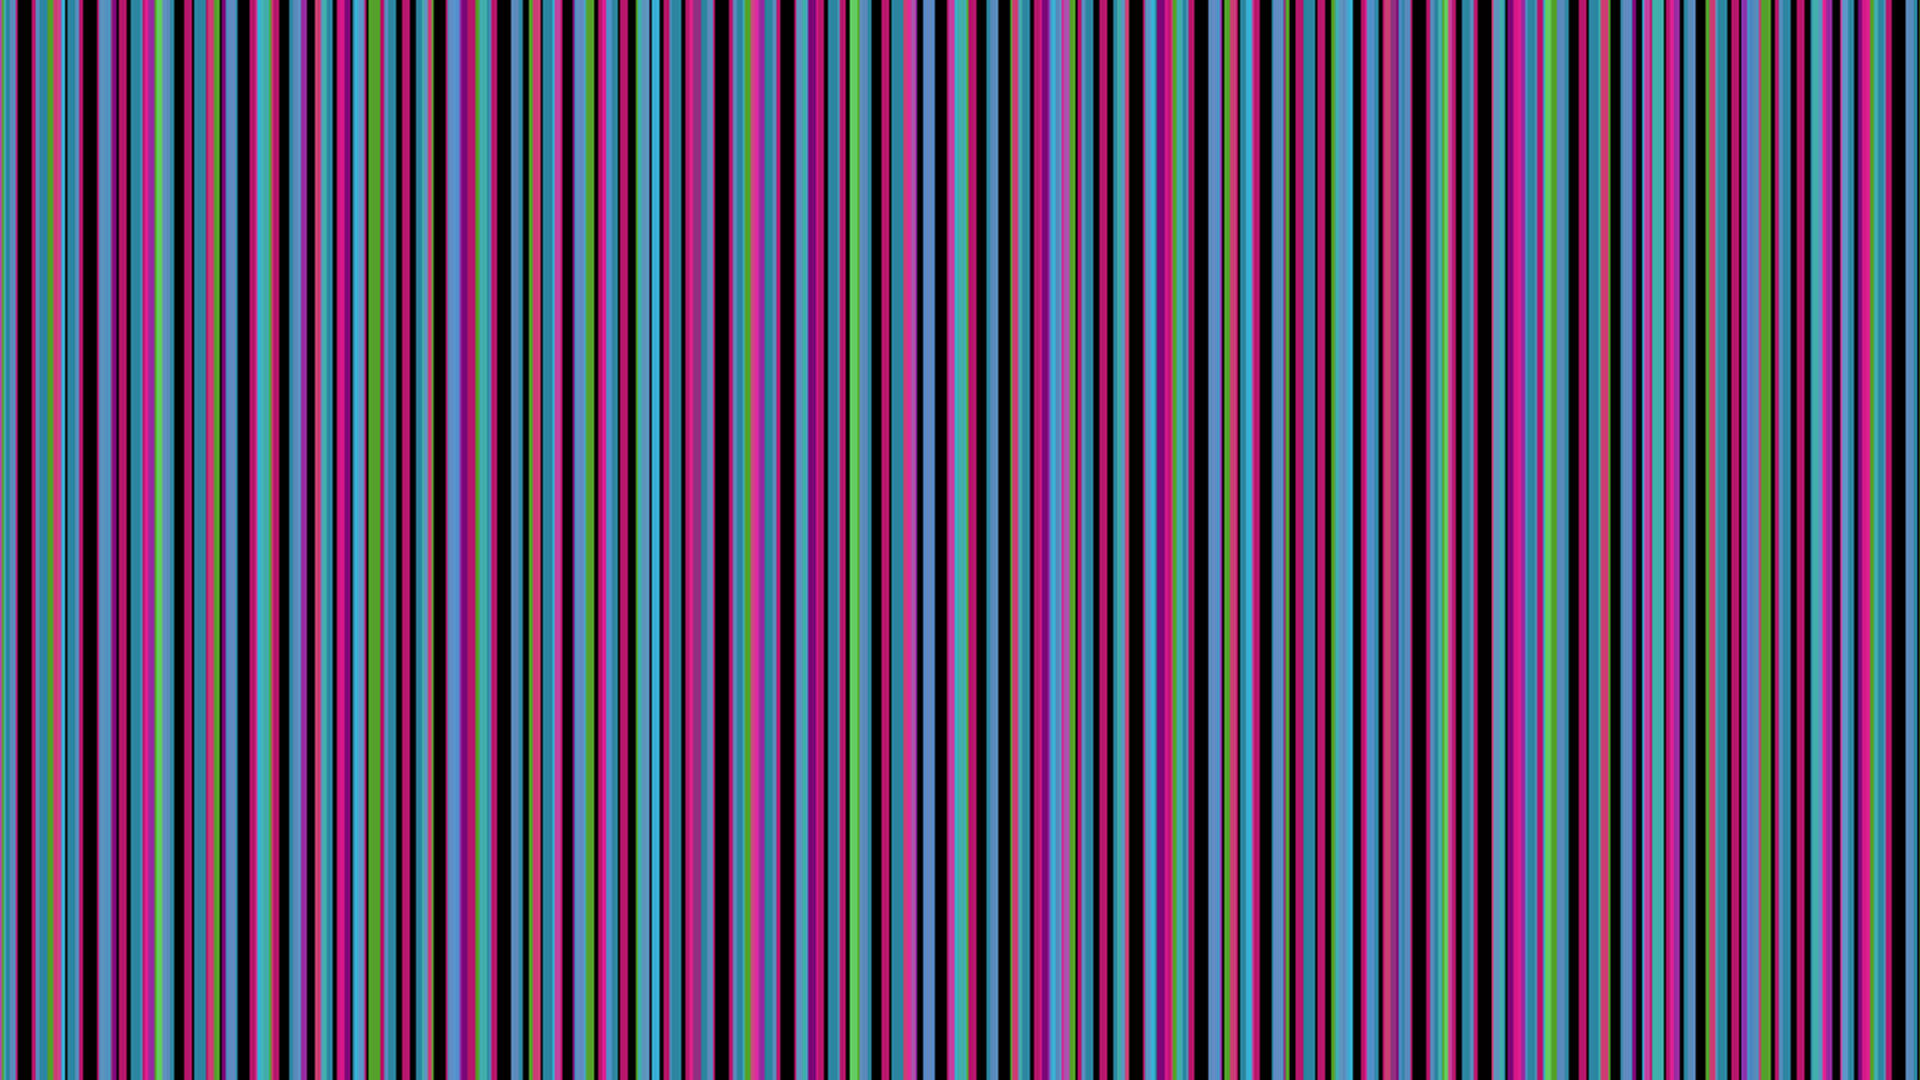 Barcode-like Rainbow Stripes Design Background